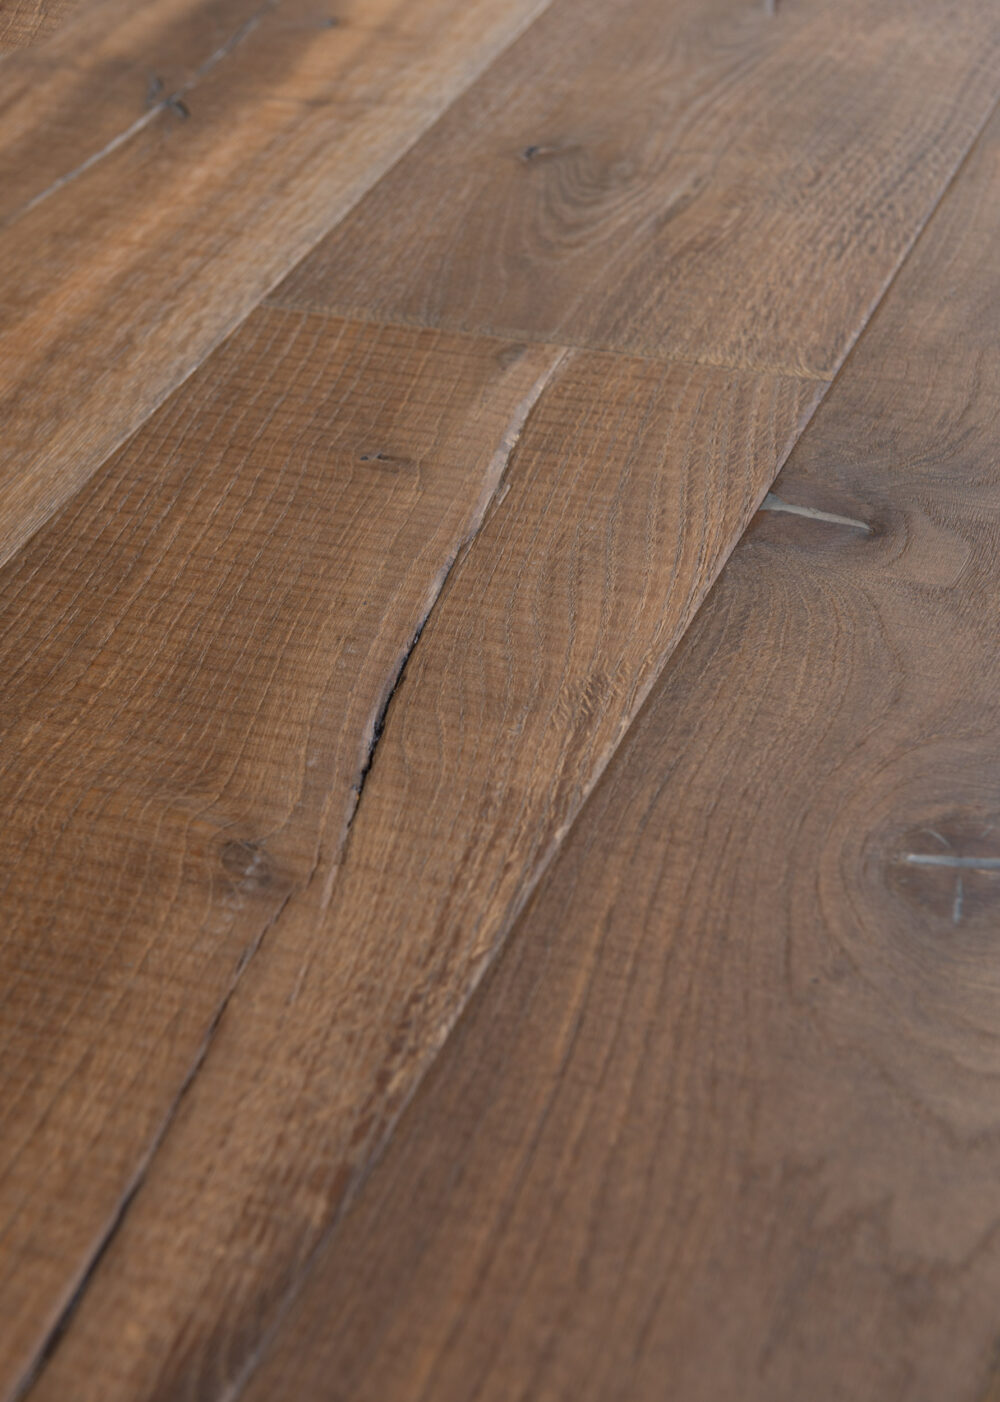 Wareham Smoked Oak Wood Flooring